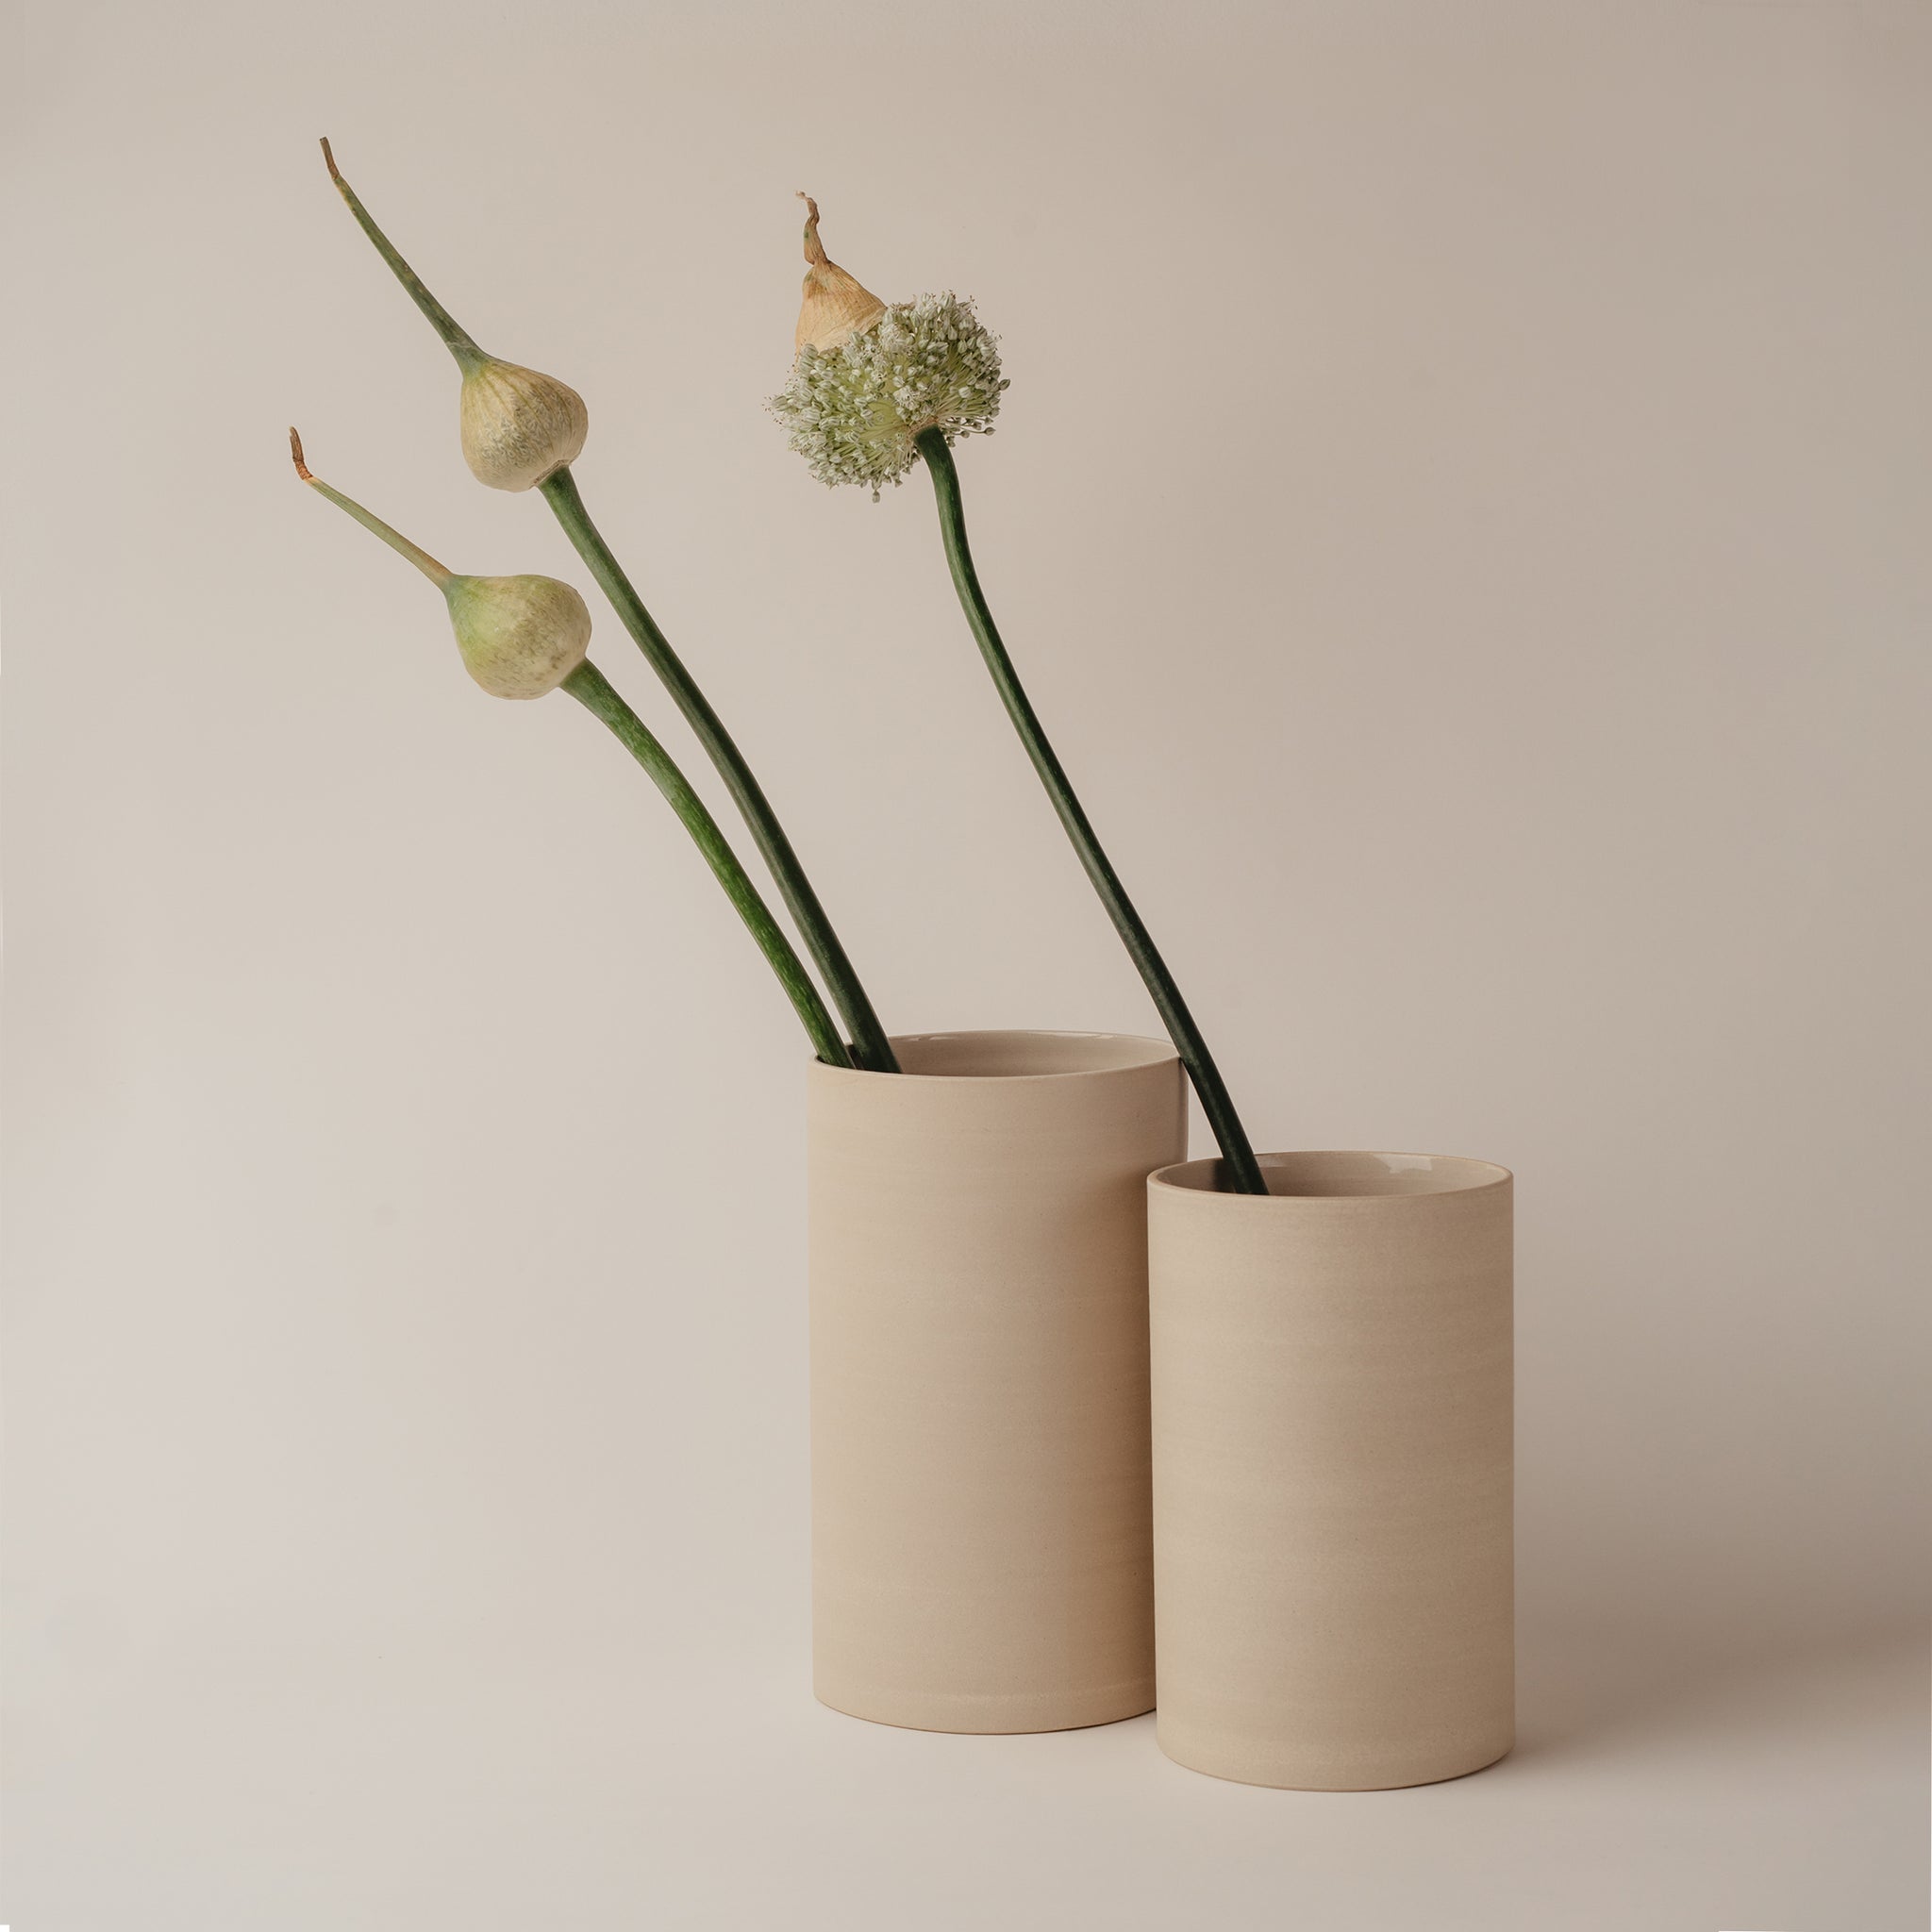 handgemachte Blumenvase aus Keramik Töpferstudio Berlin Prenzlauer Berg clai studio ceramic atelier